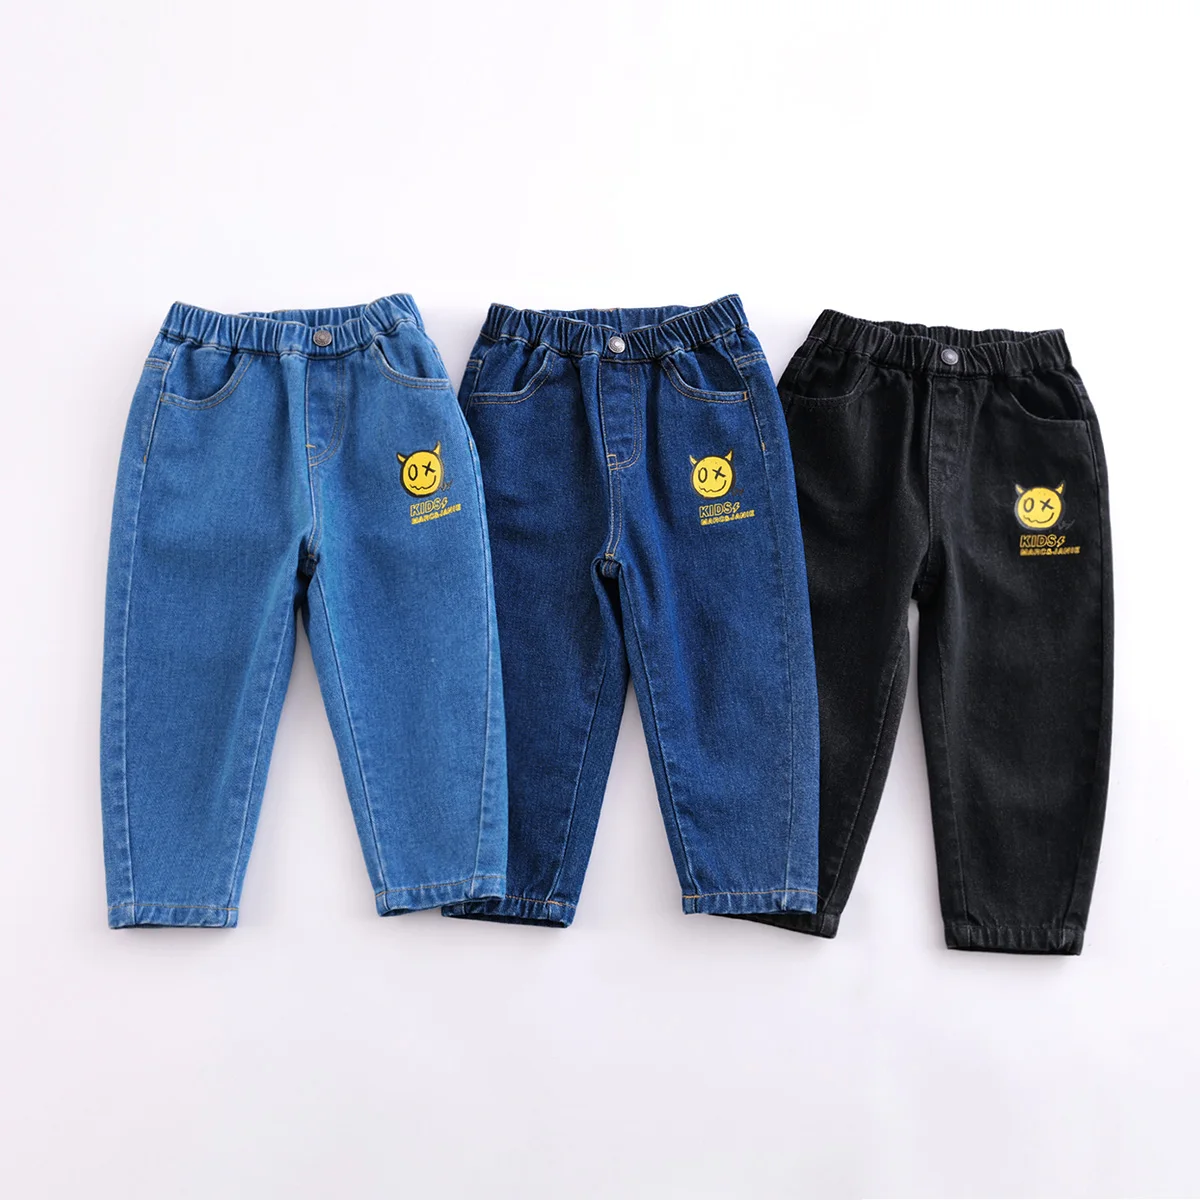 

Marc&janie Boys Pants Jeans Spring Autumn Printed Loose Denim Radish Pants Children's Pants Baby Jeans джинсы для малышей 221689